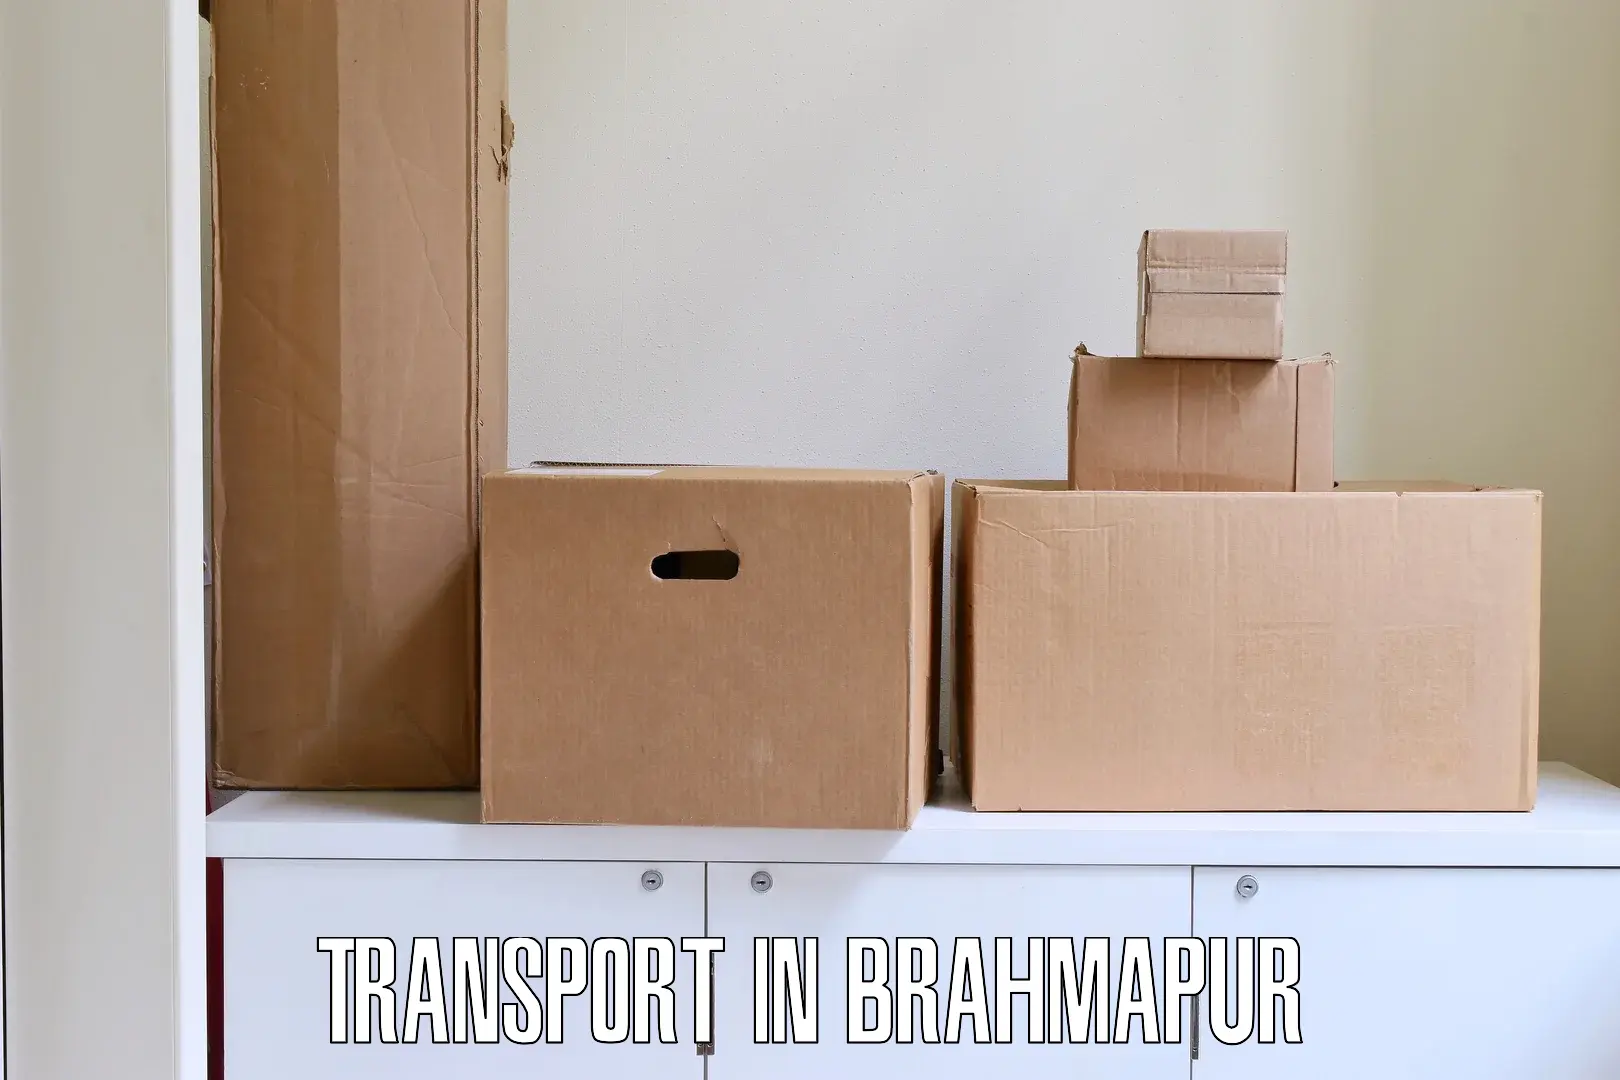 Bike transfer in Brahmapur